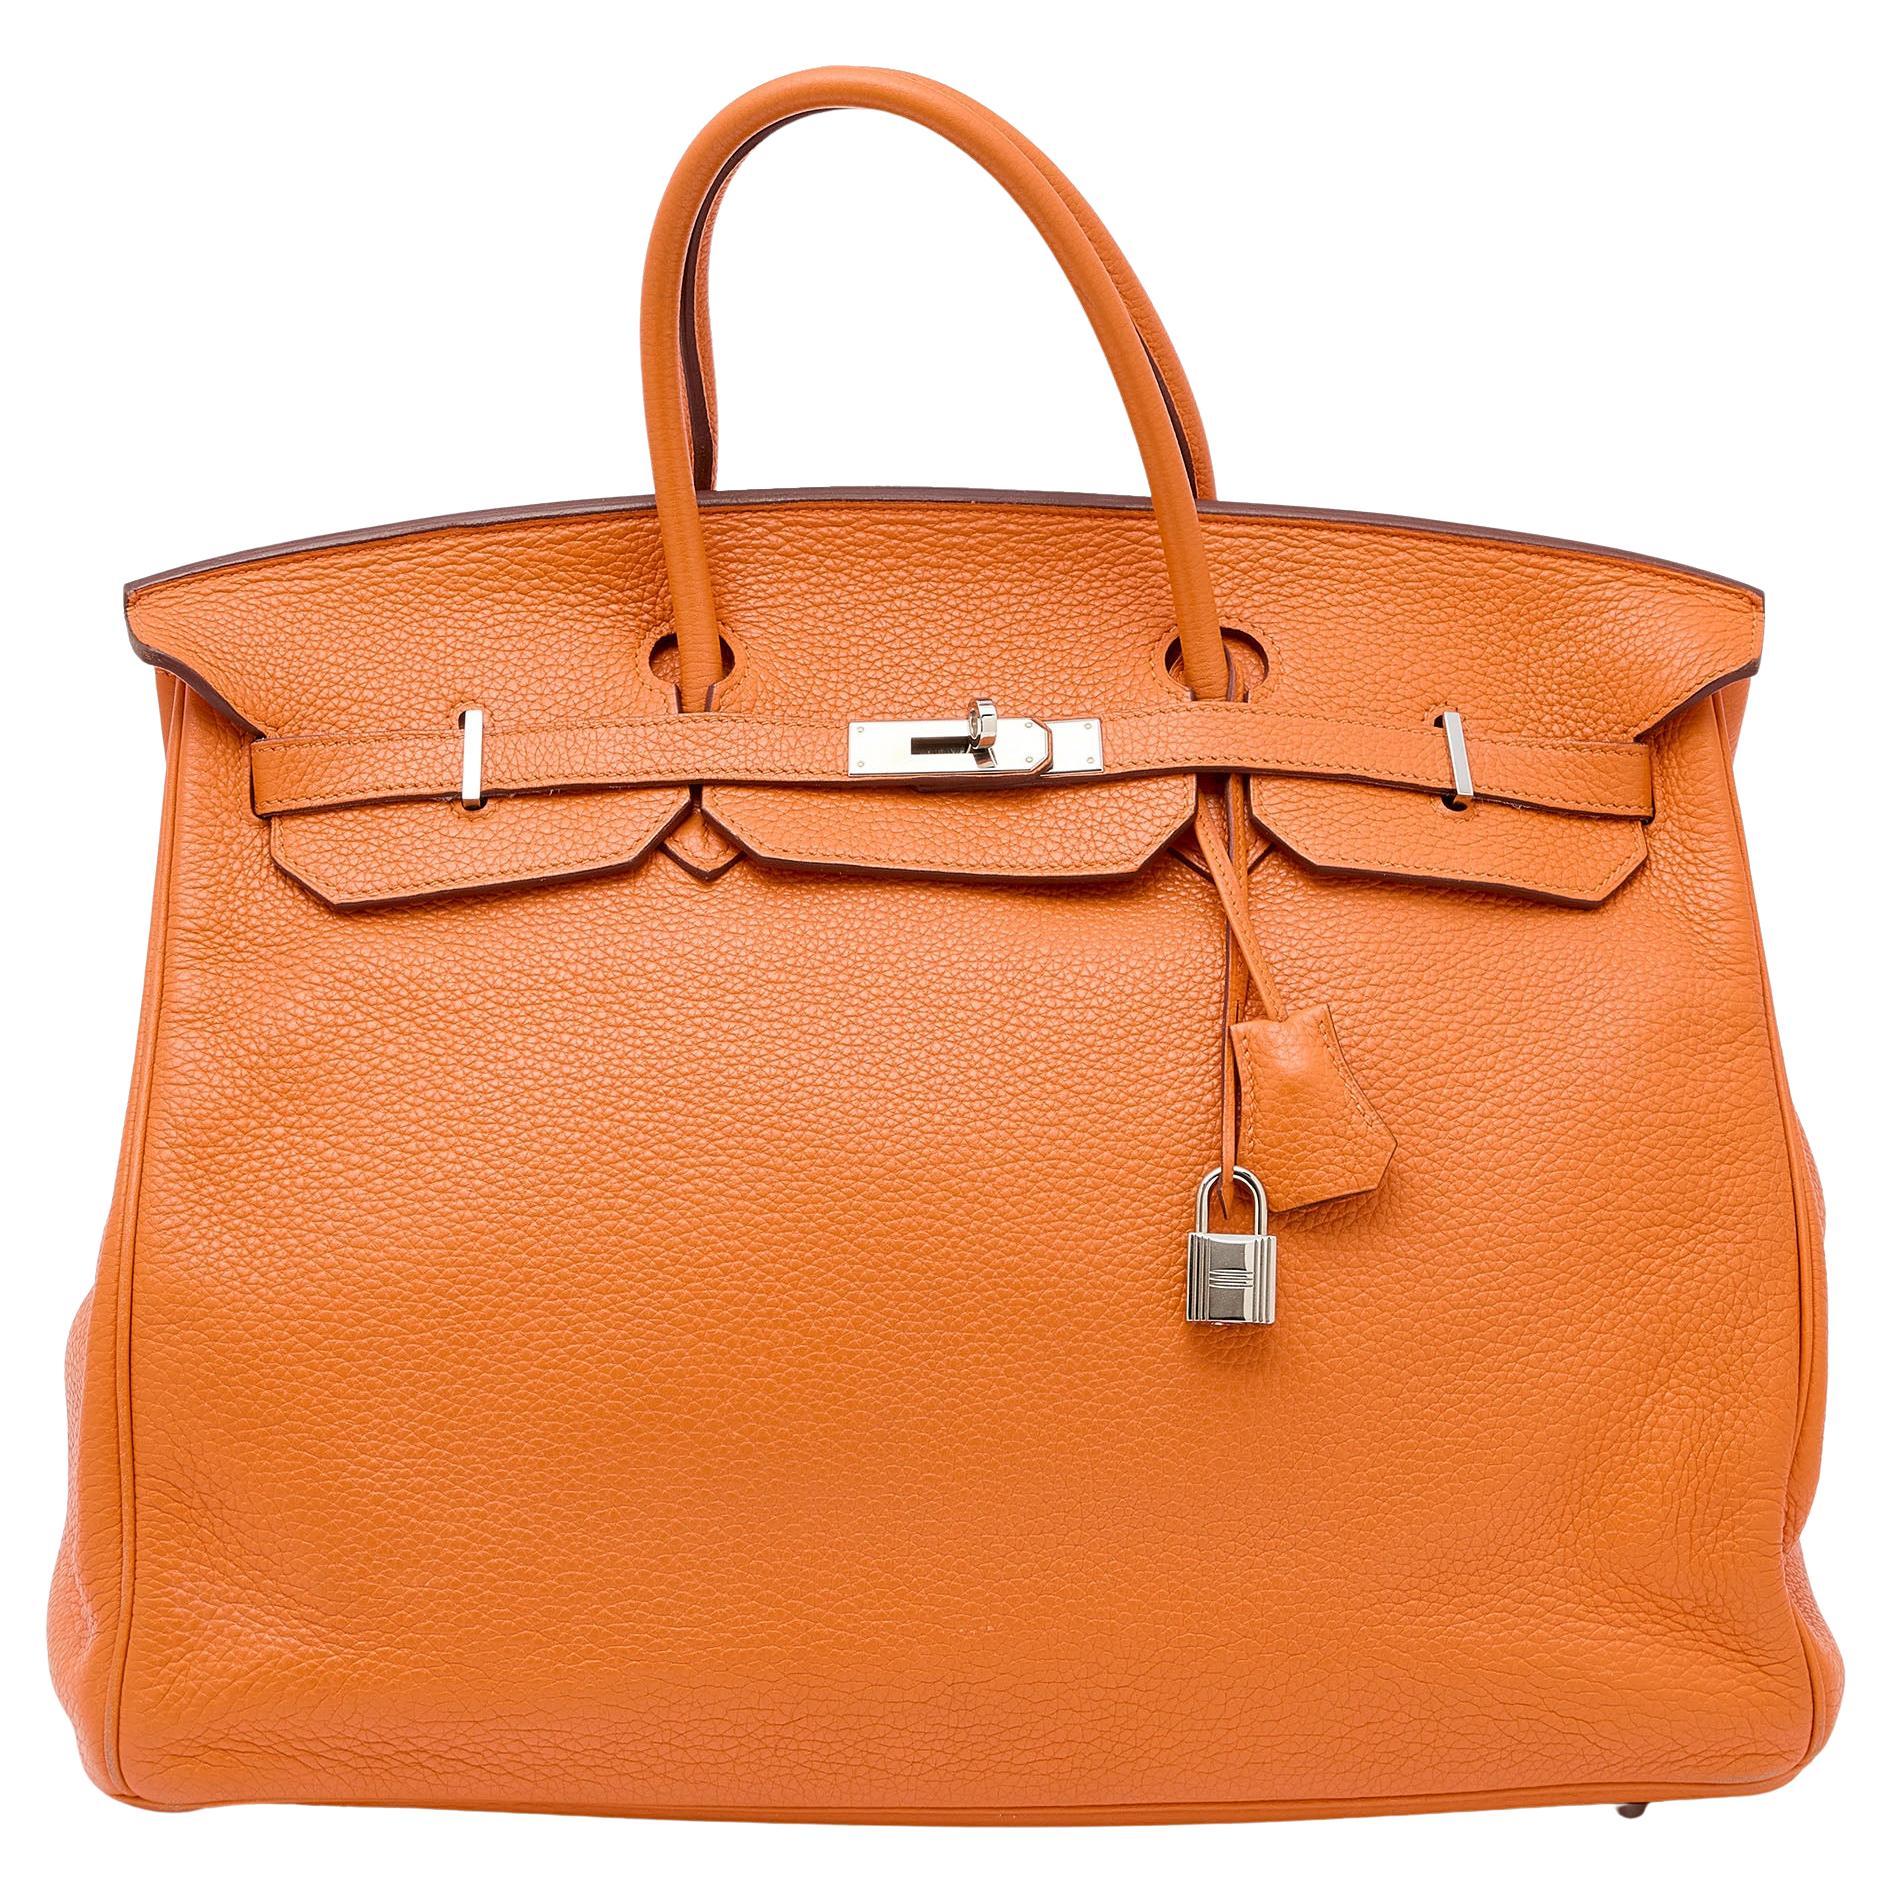 Hermès Orange Togo Leather Palladium Plated Birkin 40 Bag